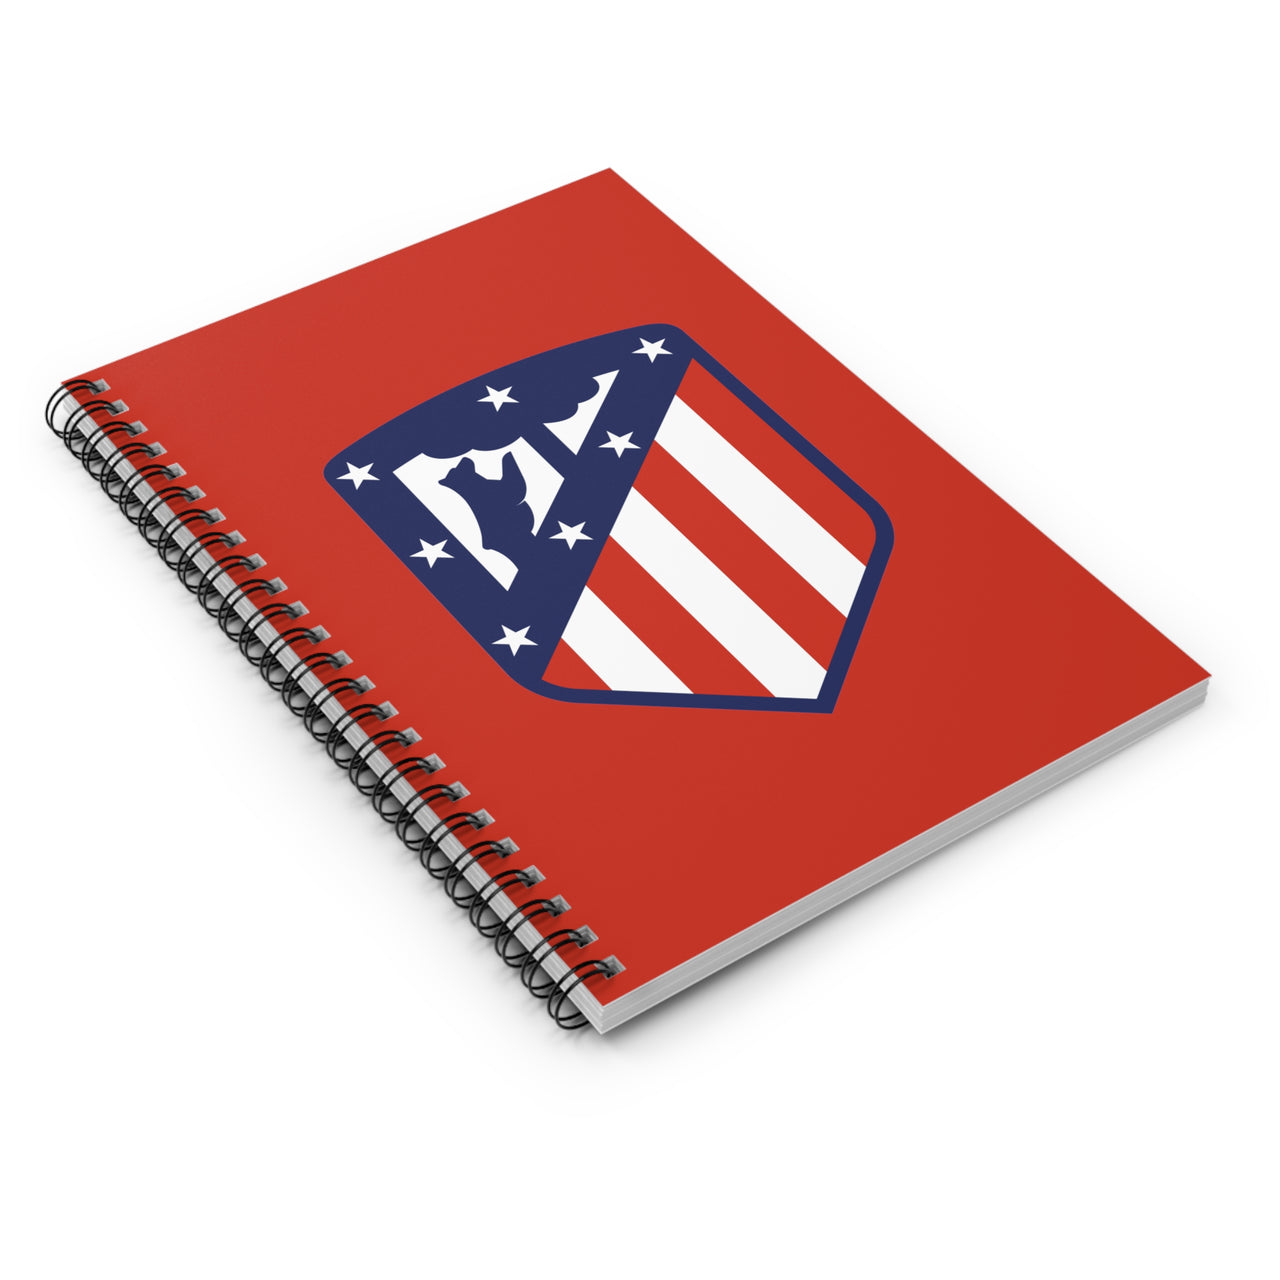 Atletico Madrid Spiral Notebook - Ruled Line